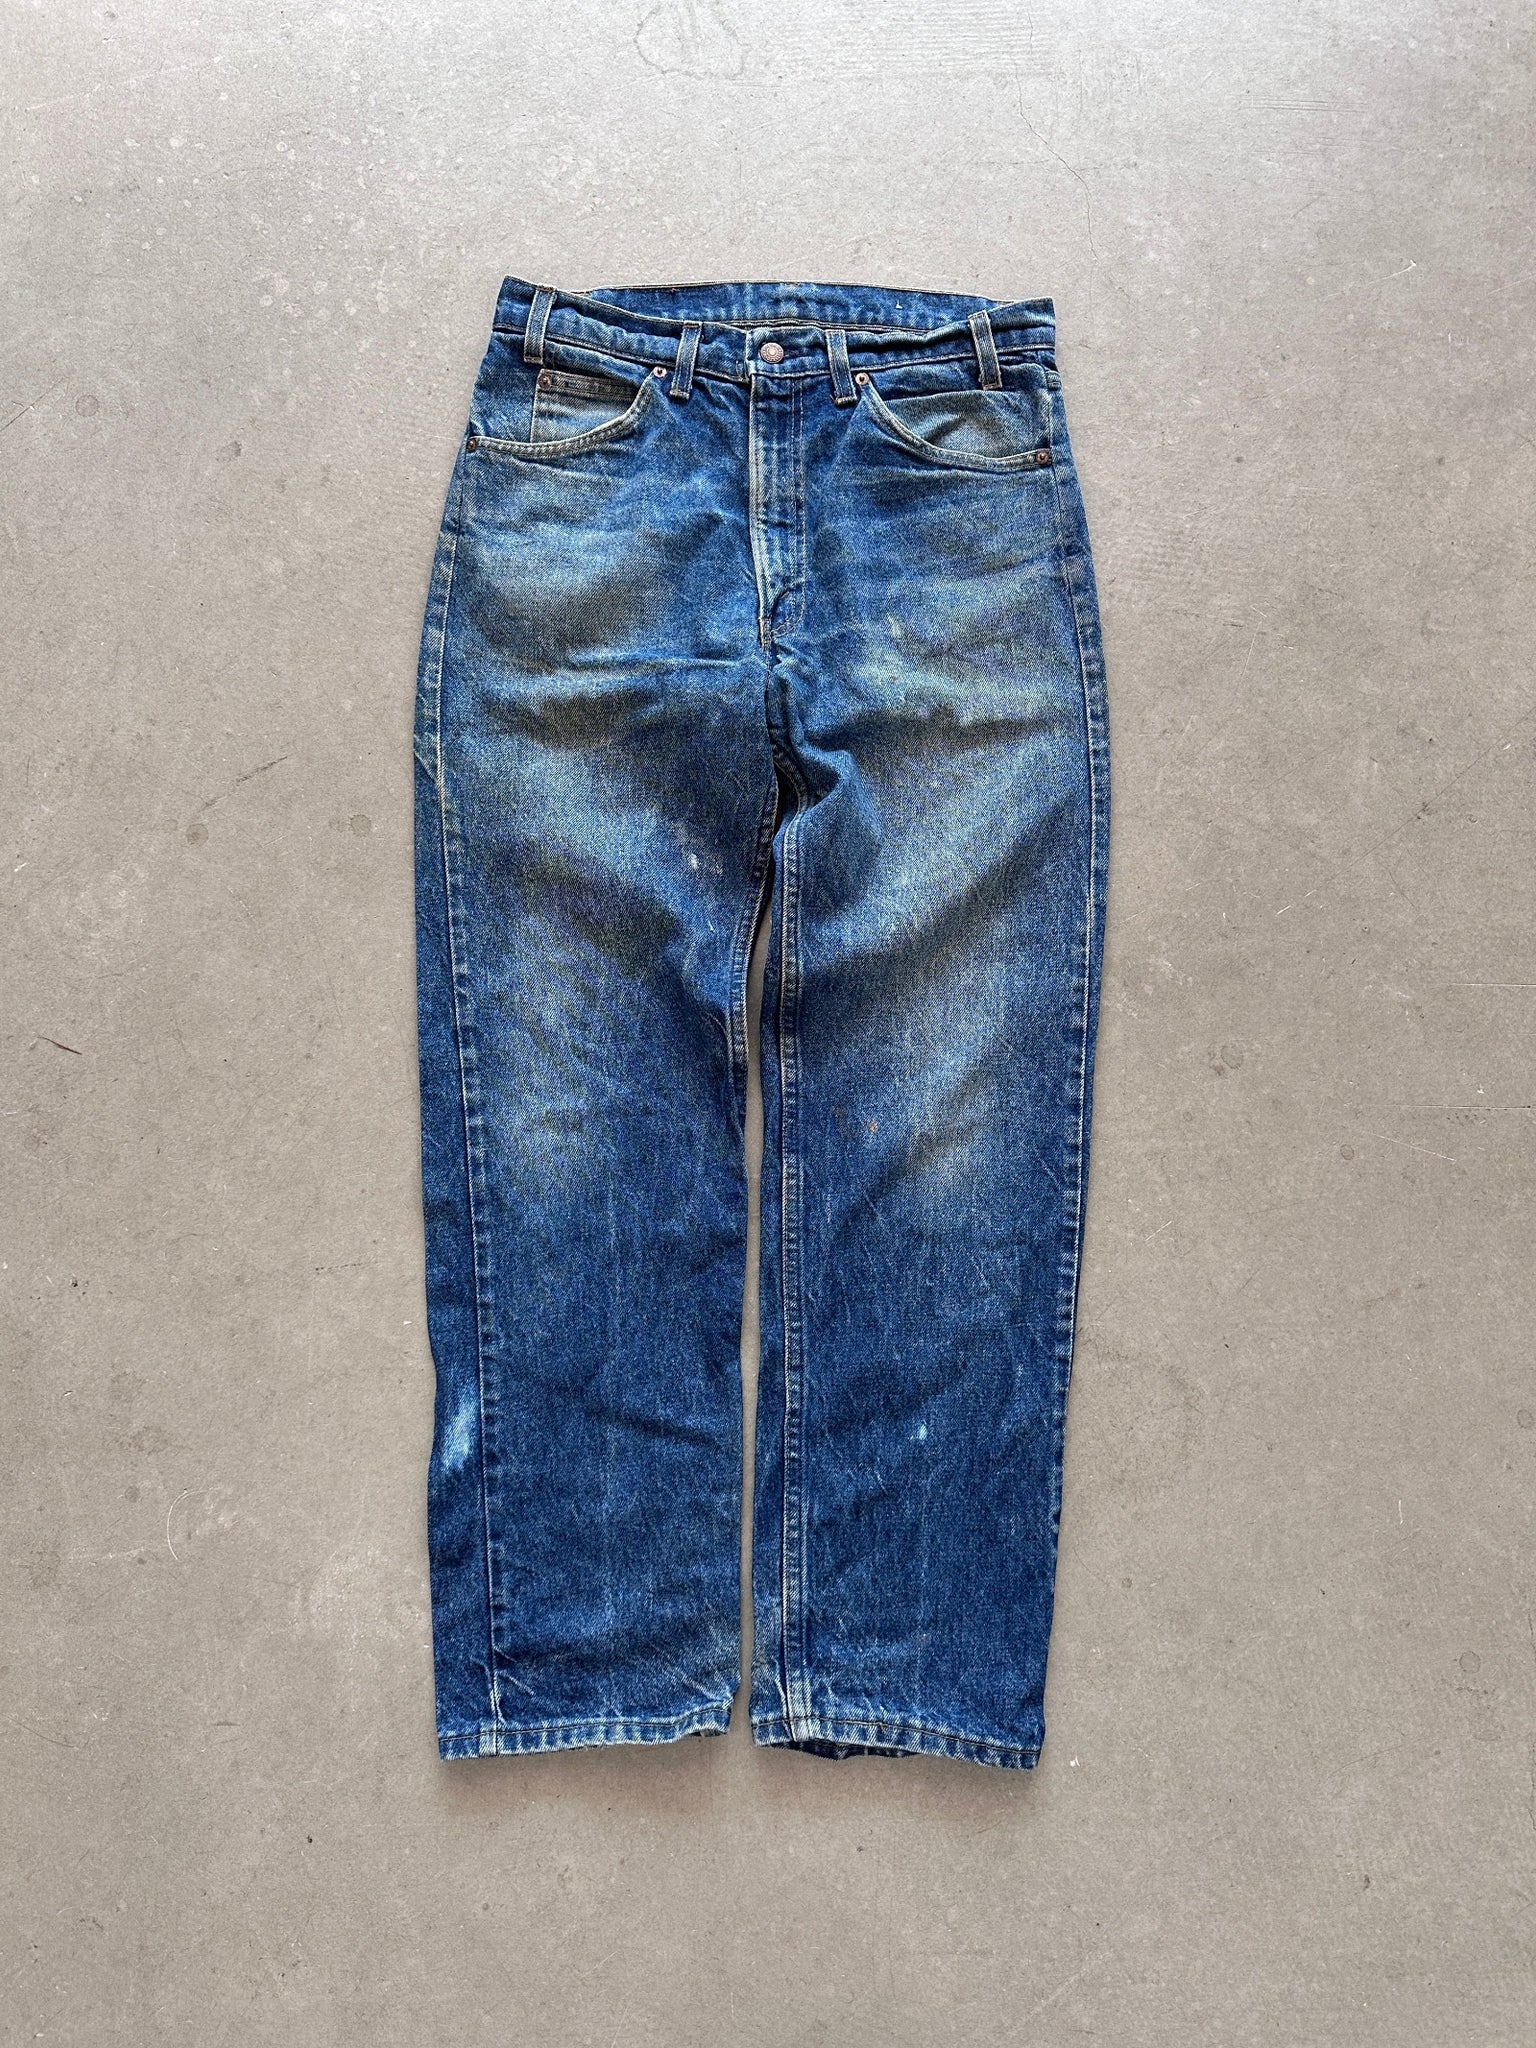 1980's Levi's Orange Tab 505 Jeans - 33 x 30